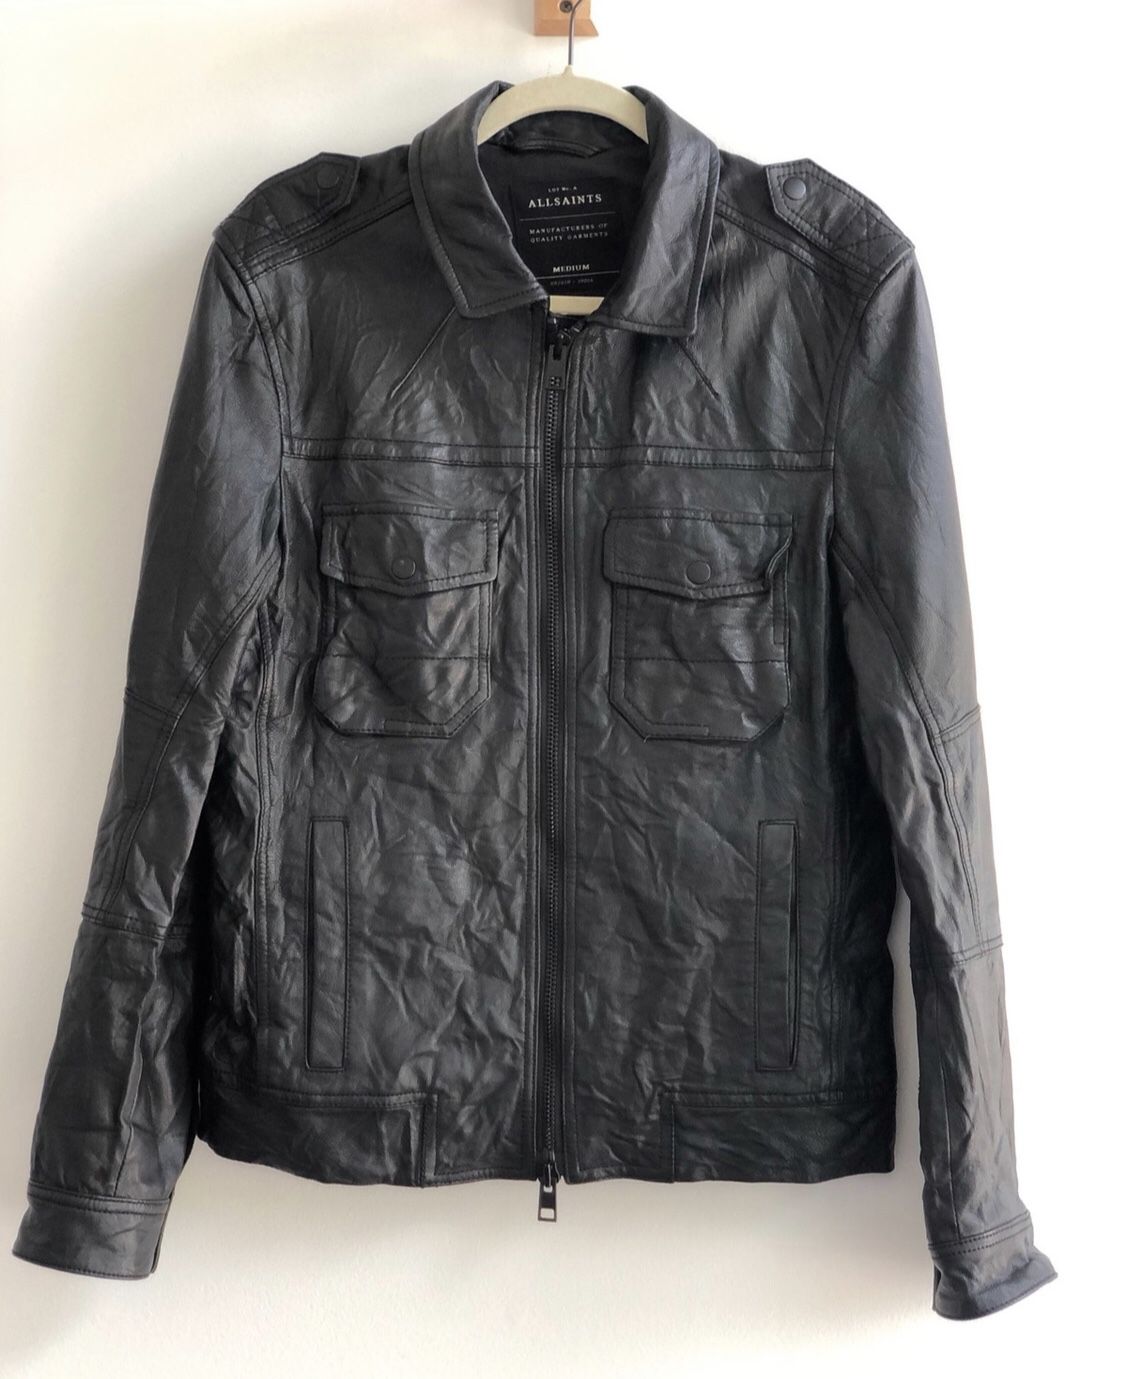 All Saints Leather Jacket - Medium (New w/o tags)